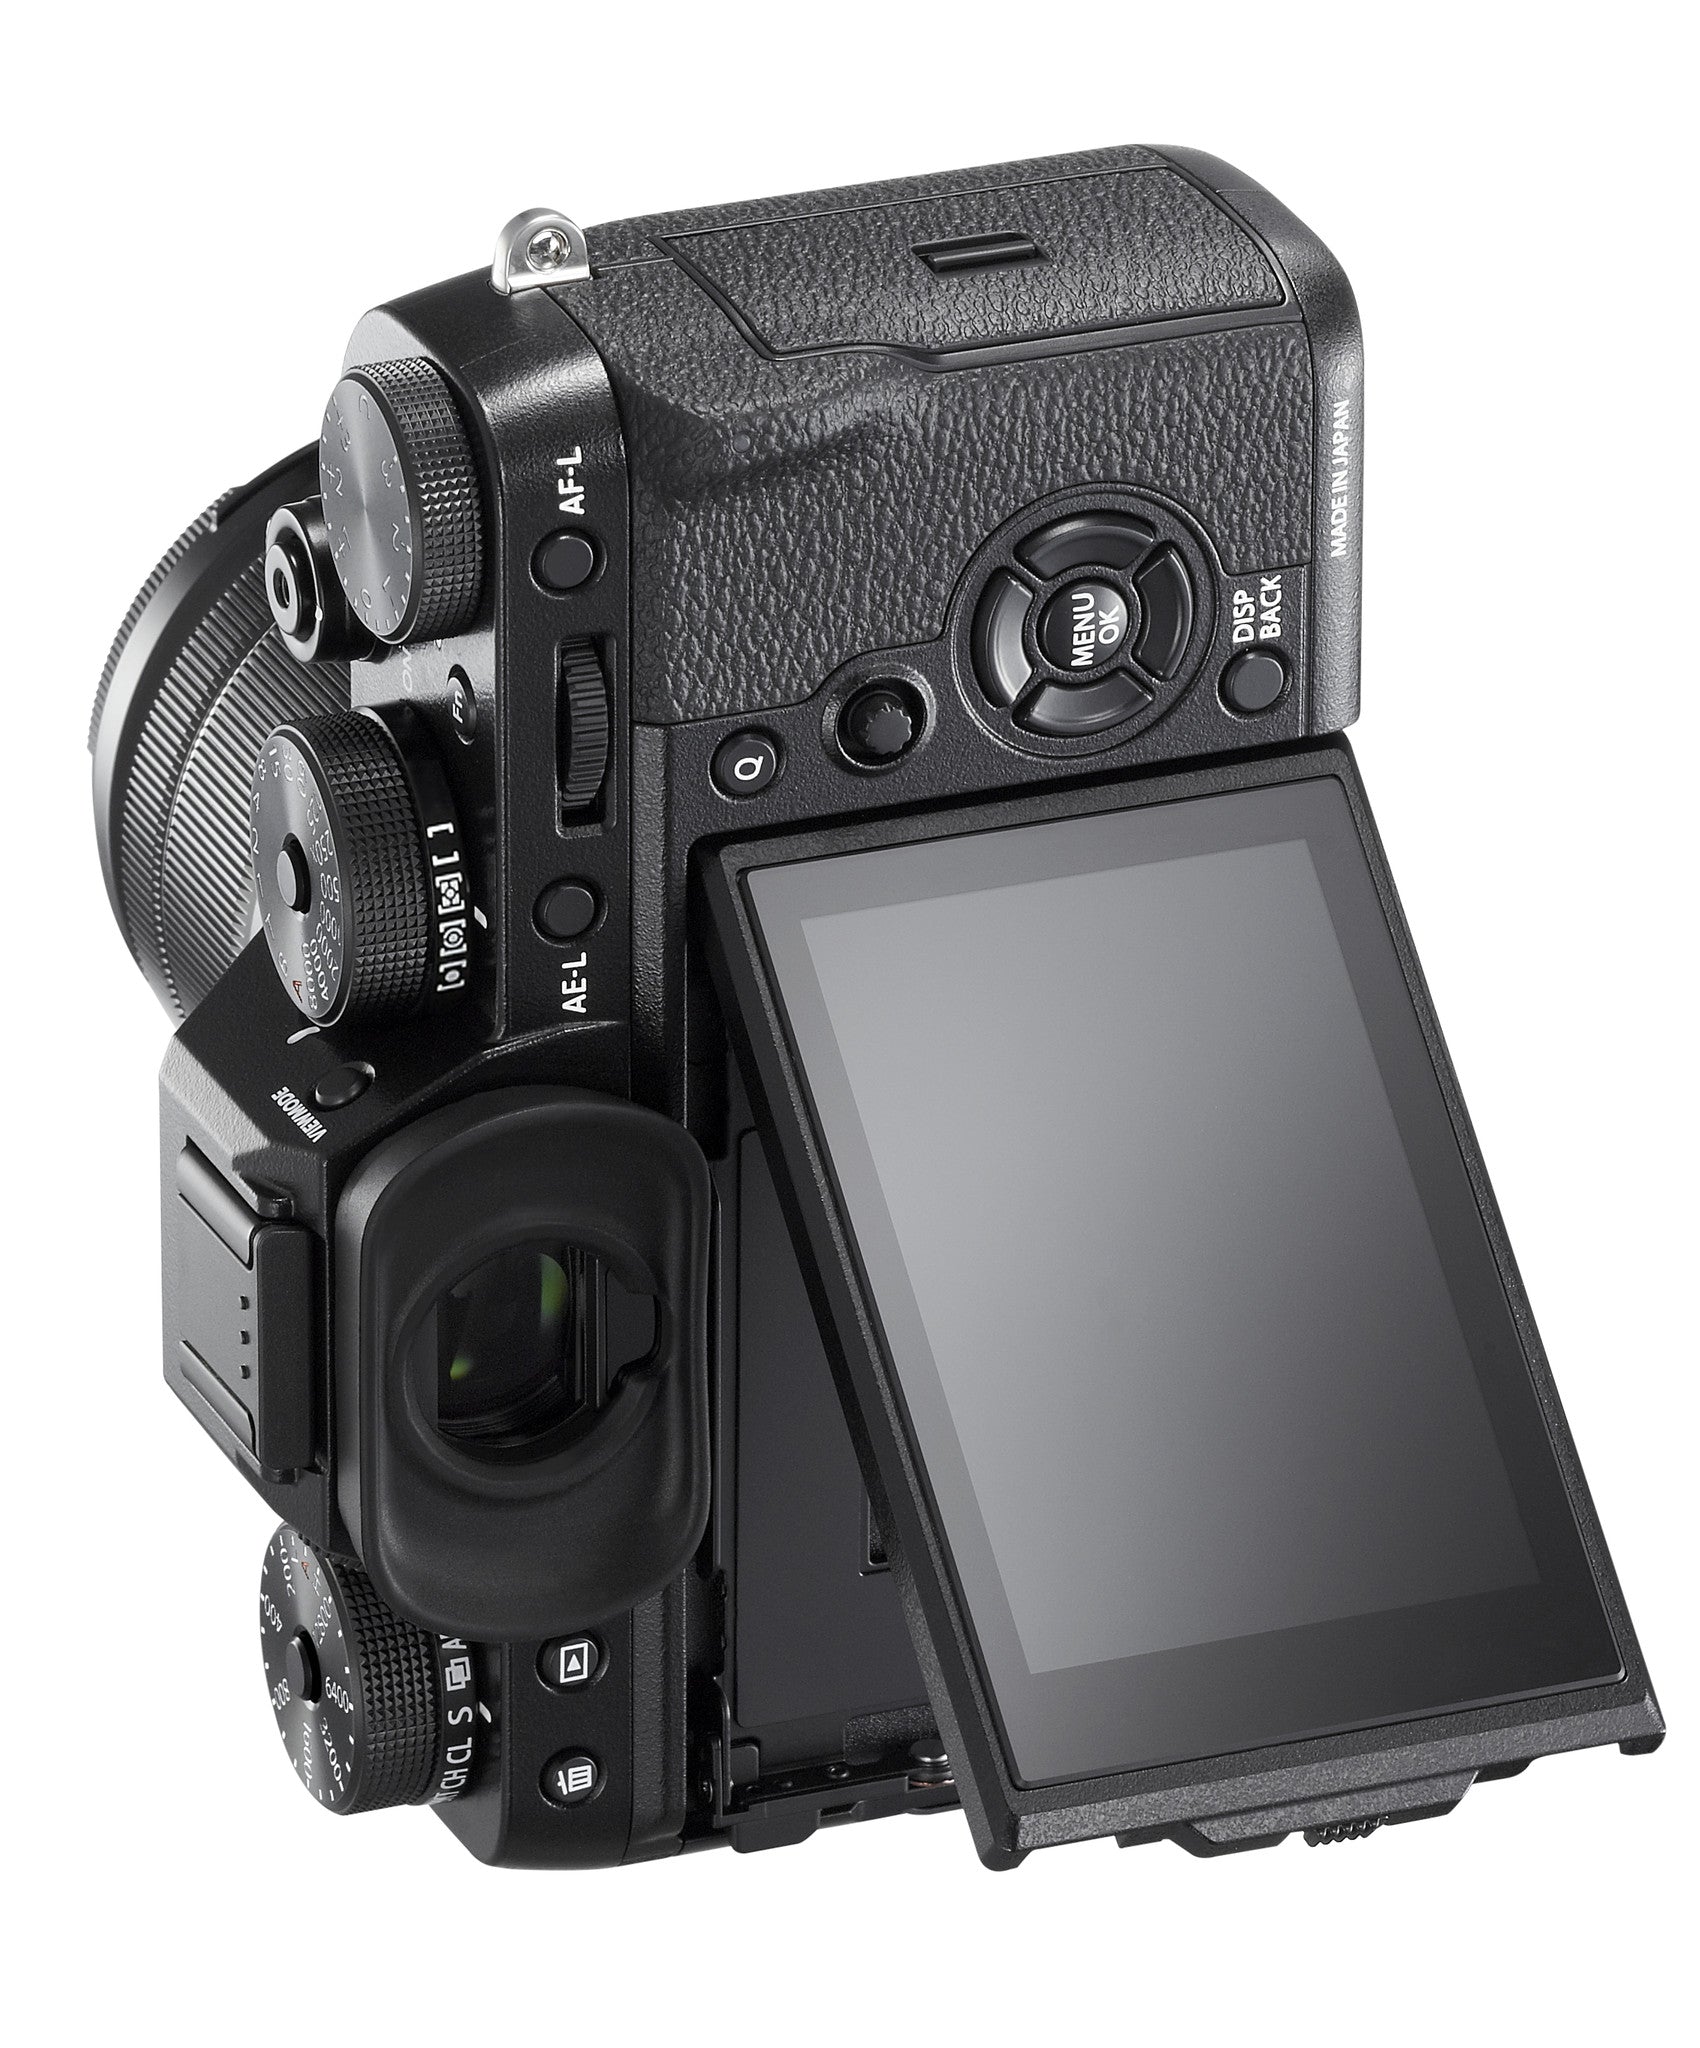 Fujifilm X-T2 Digital Camera w/ 18-55mm Lens Kit (Black), camera mirrorless cameras, Fujifilm - Pictureline  - 3